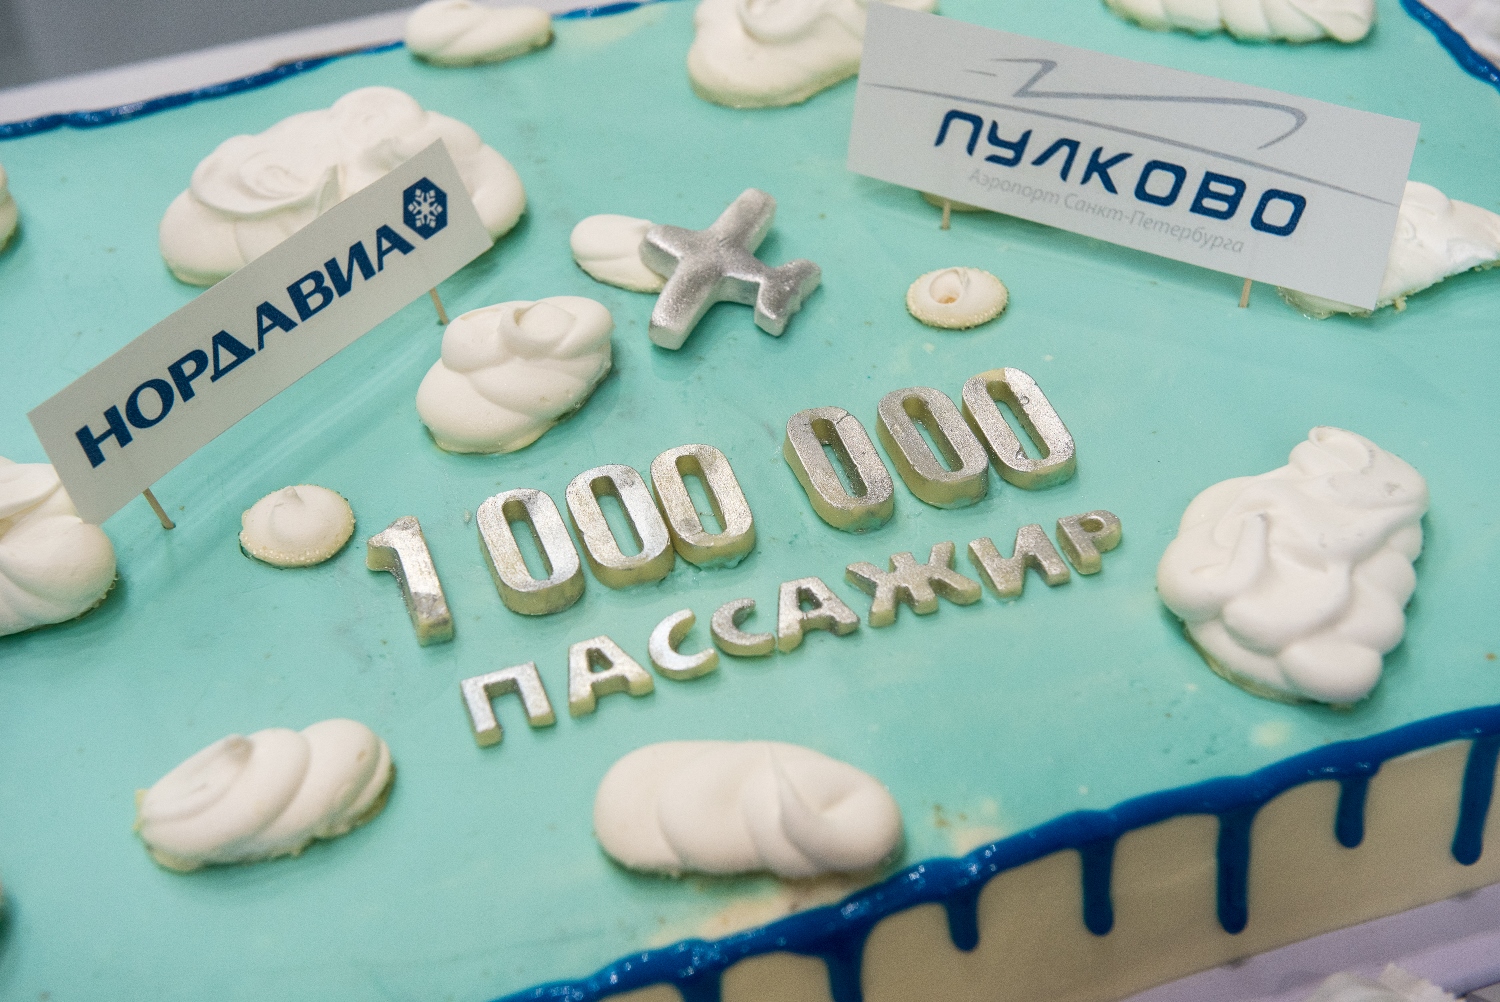 Пулково поздравил миллионного пассажира авиакомпании «Нордавиа» в 2018 году